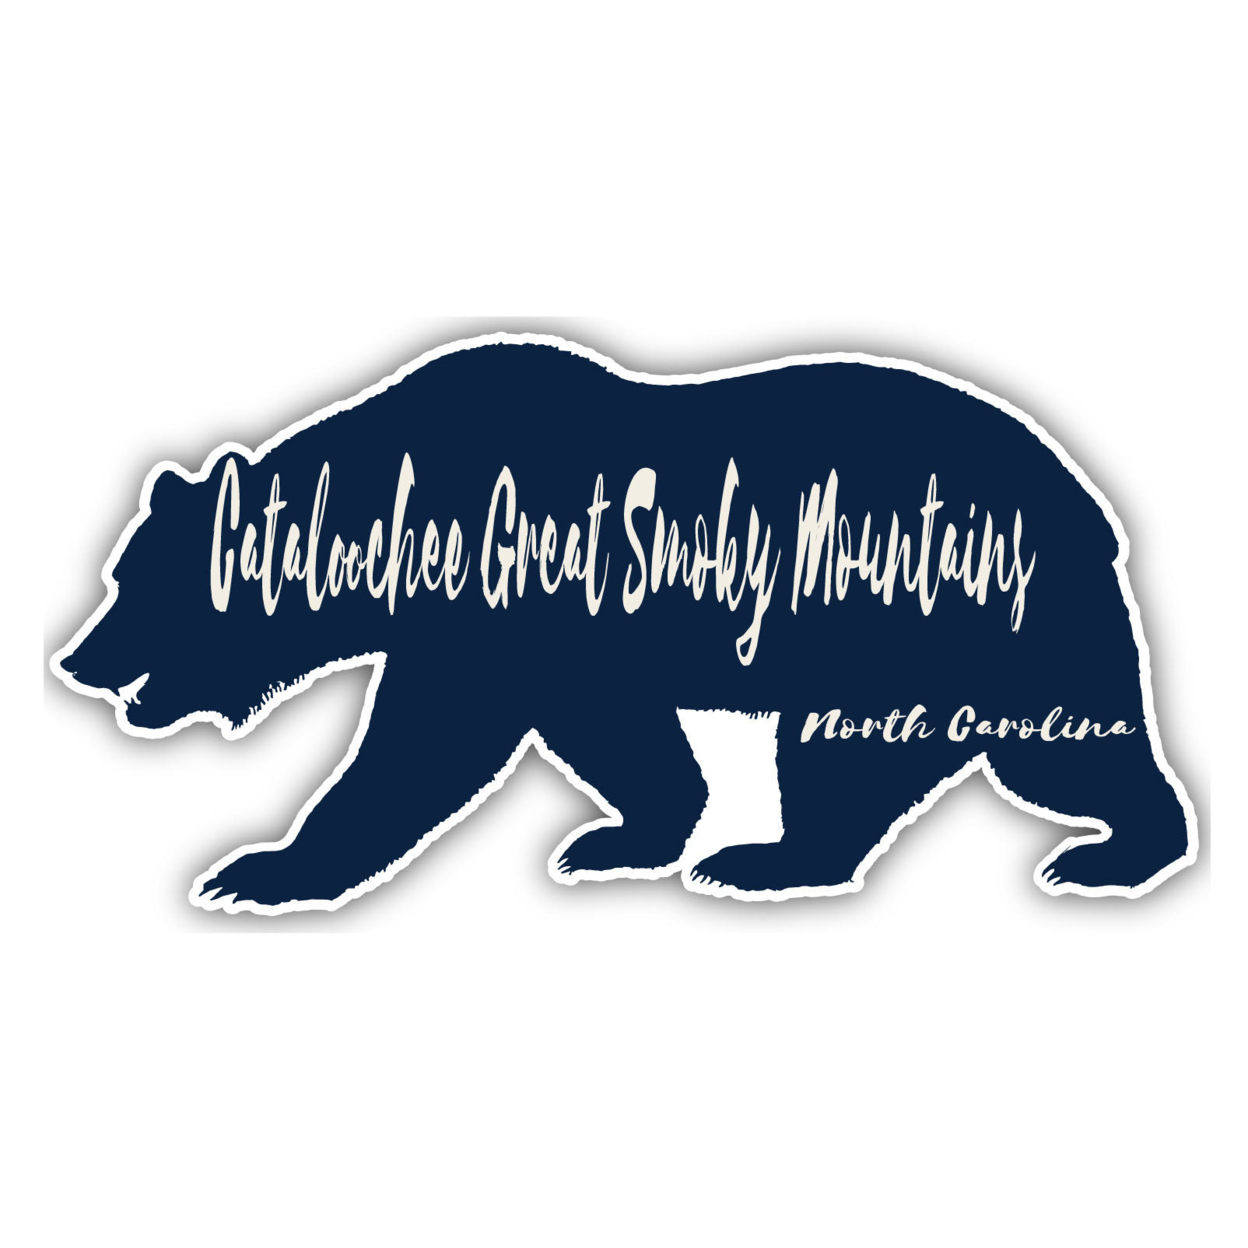 Cataloochee Great Smoky Mountains North Carolina Souvenir Decorative Stickers (Choose Theme And Size) - Single Unit, 8-Inch, Bear